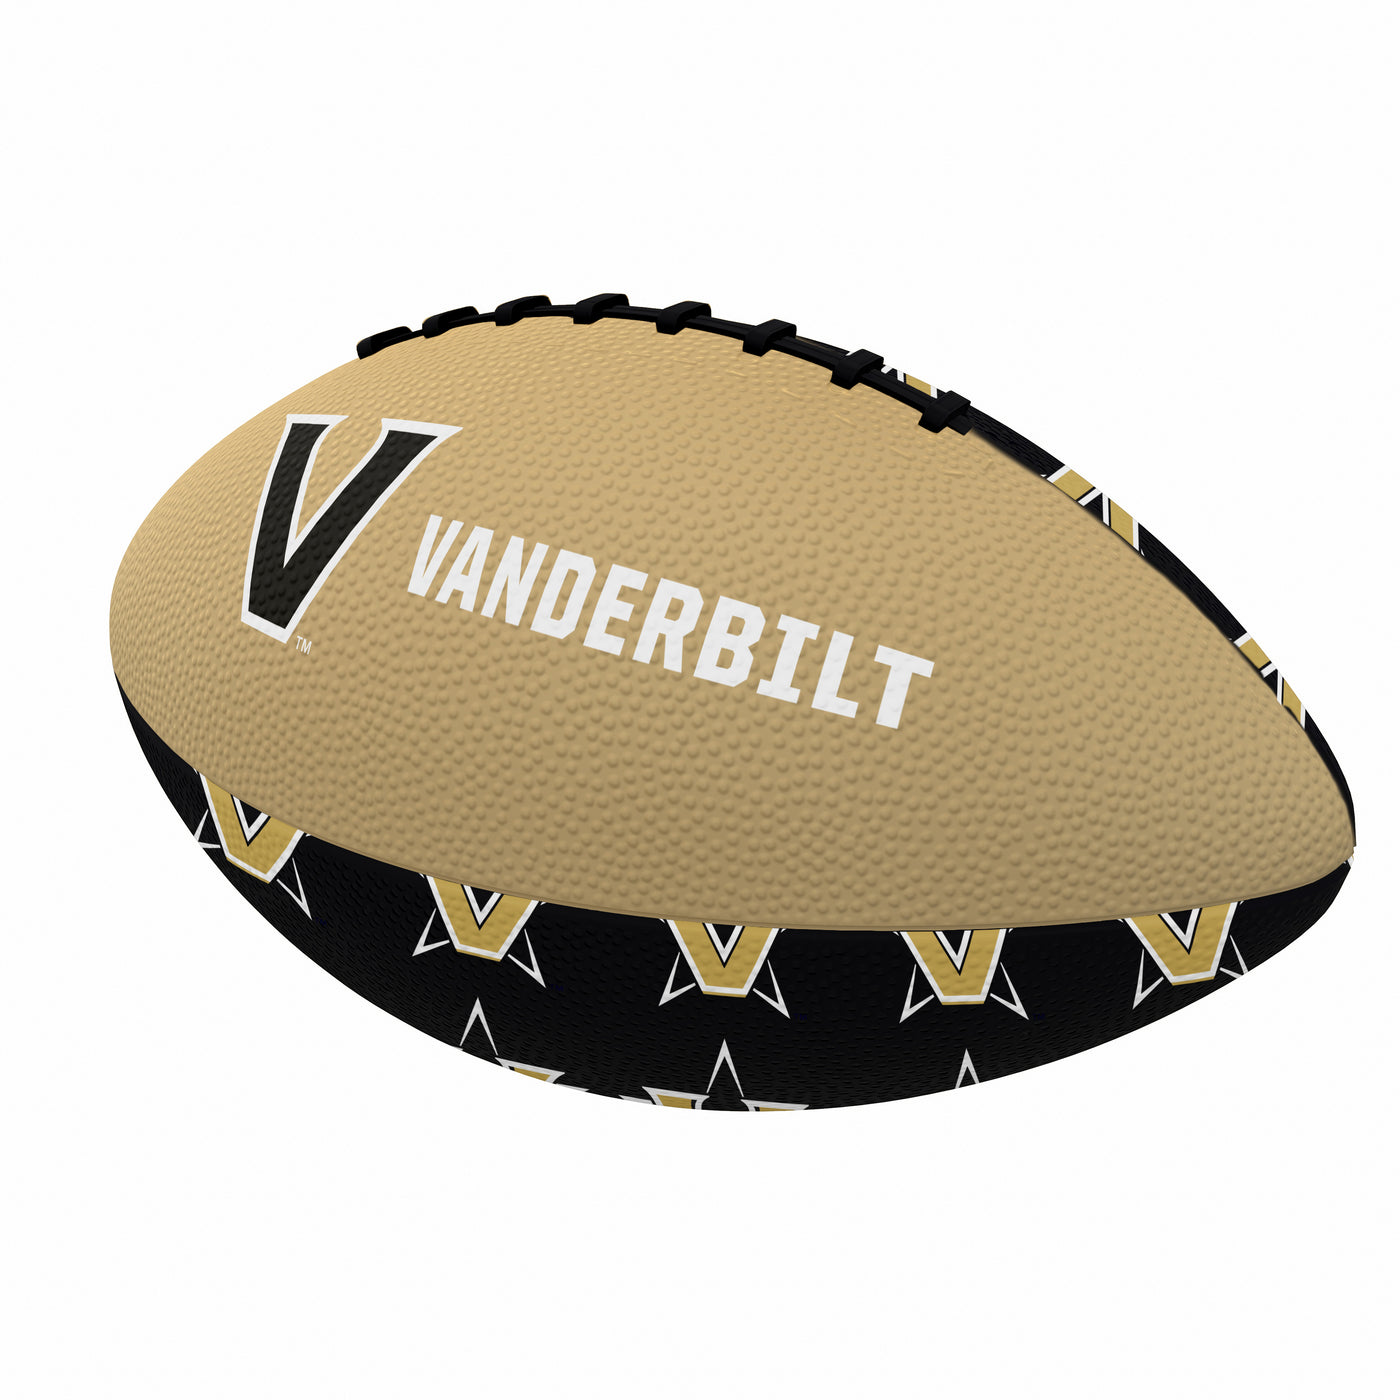 Vanderbilt Repeating Mini-Size Rubber Football